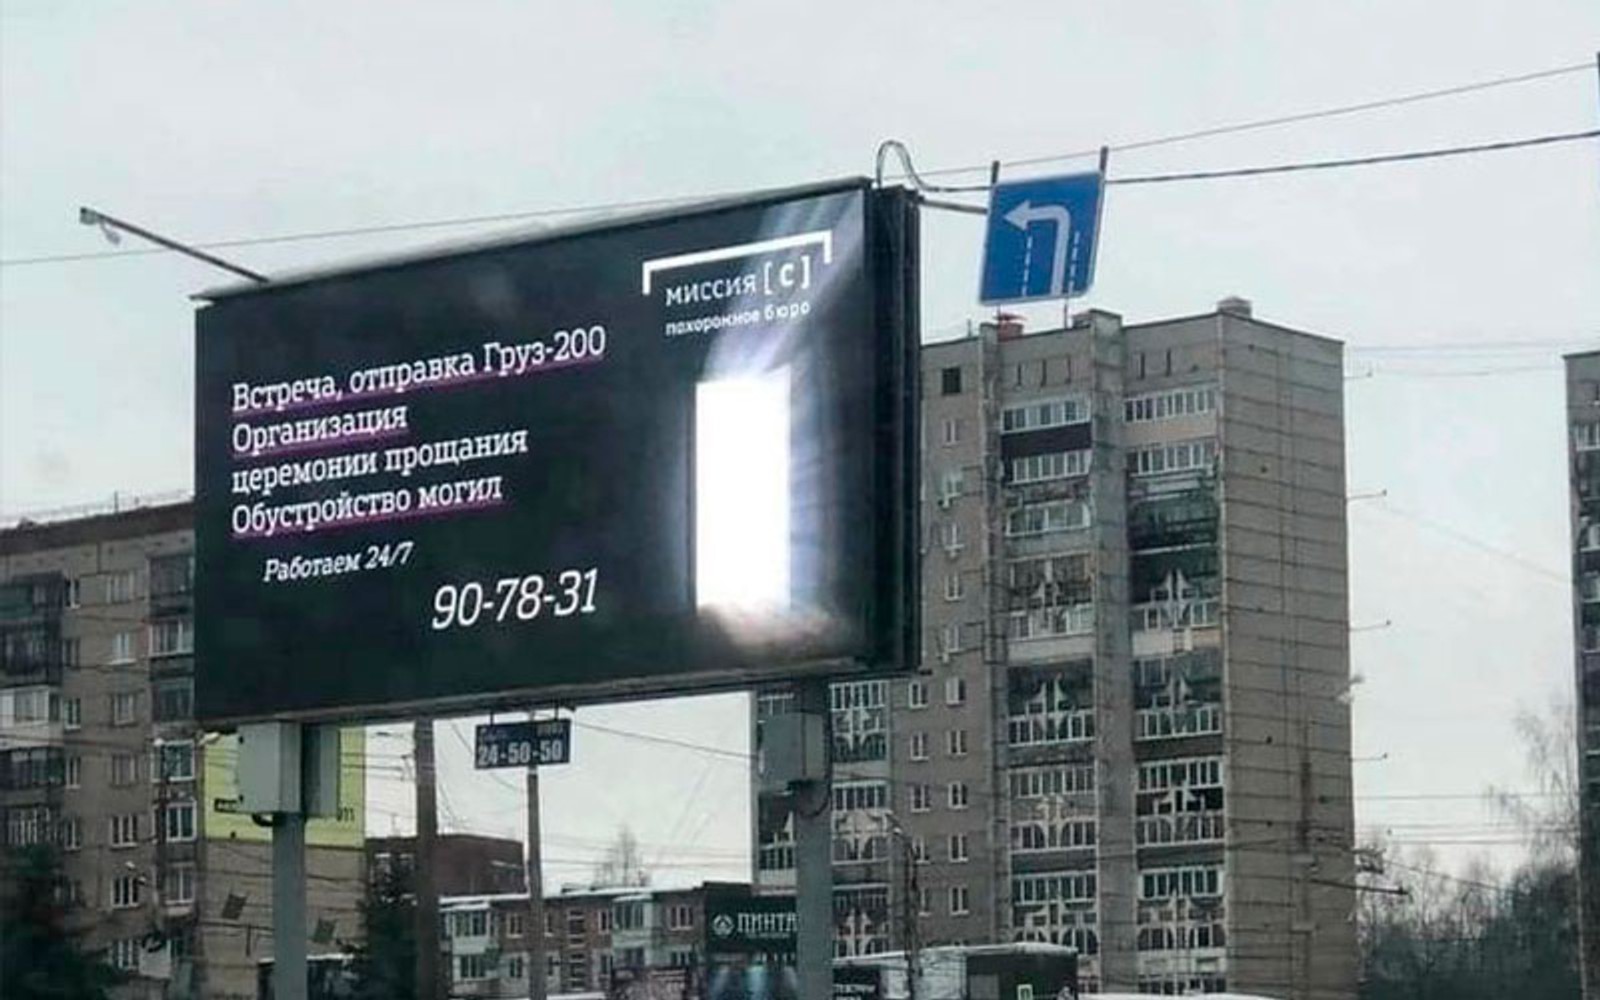 В Ижевске установили баннер с рекламой доставки груза 200